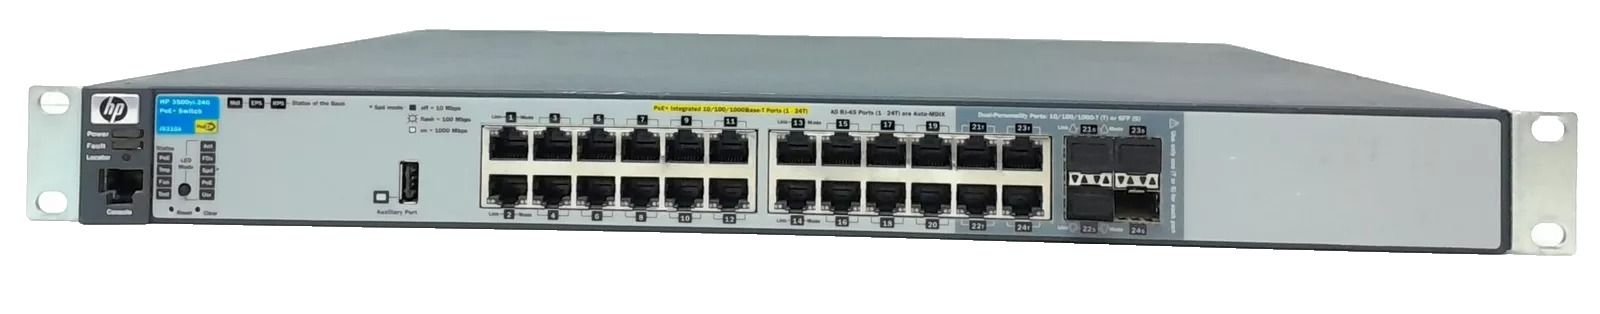 J9310A HP ProCurve 3500-24G-POE+ 24-Port Gigabit POE Ethernet 3500YL-24G Switch